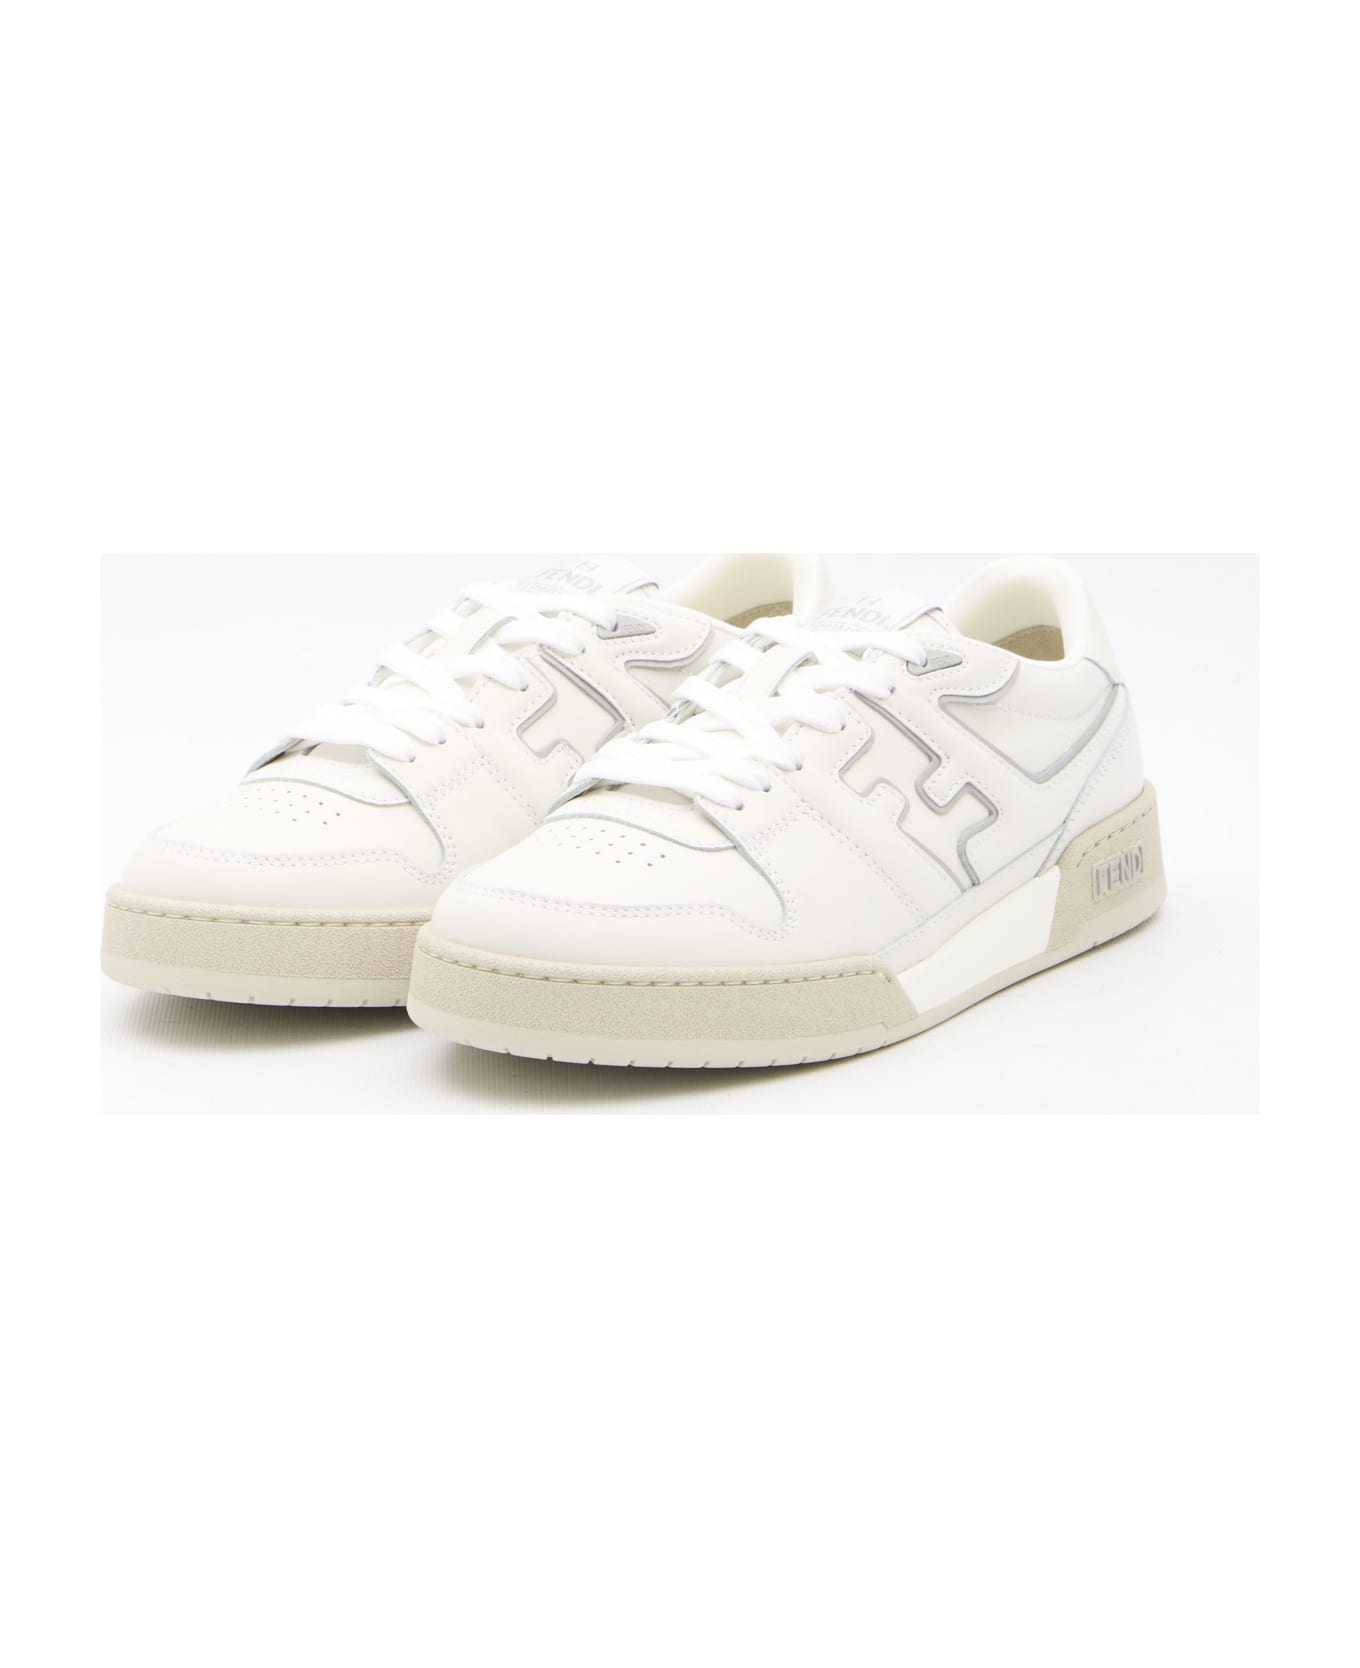 Fendi Match Sneakers - WHITE